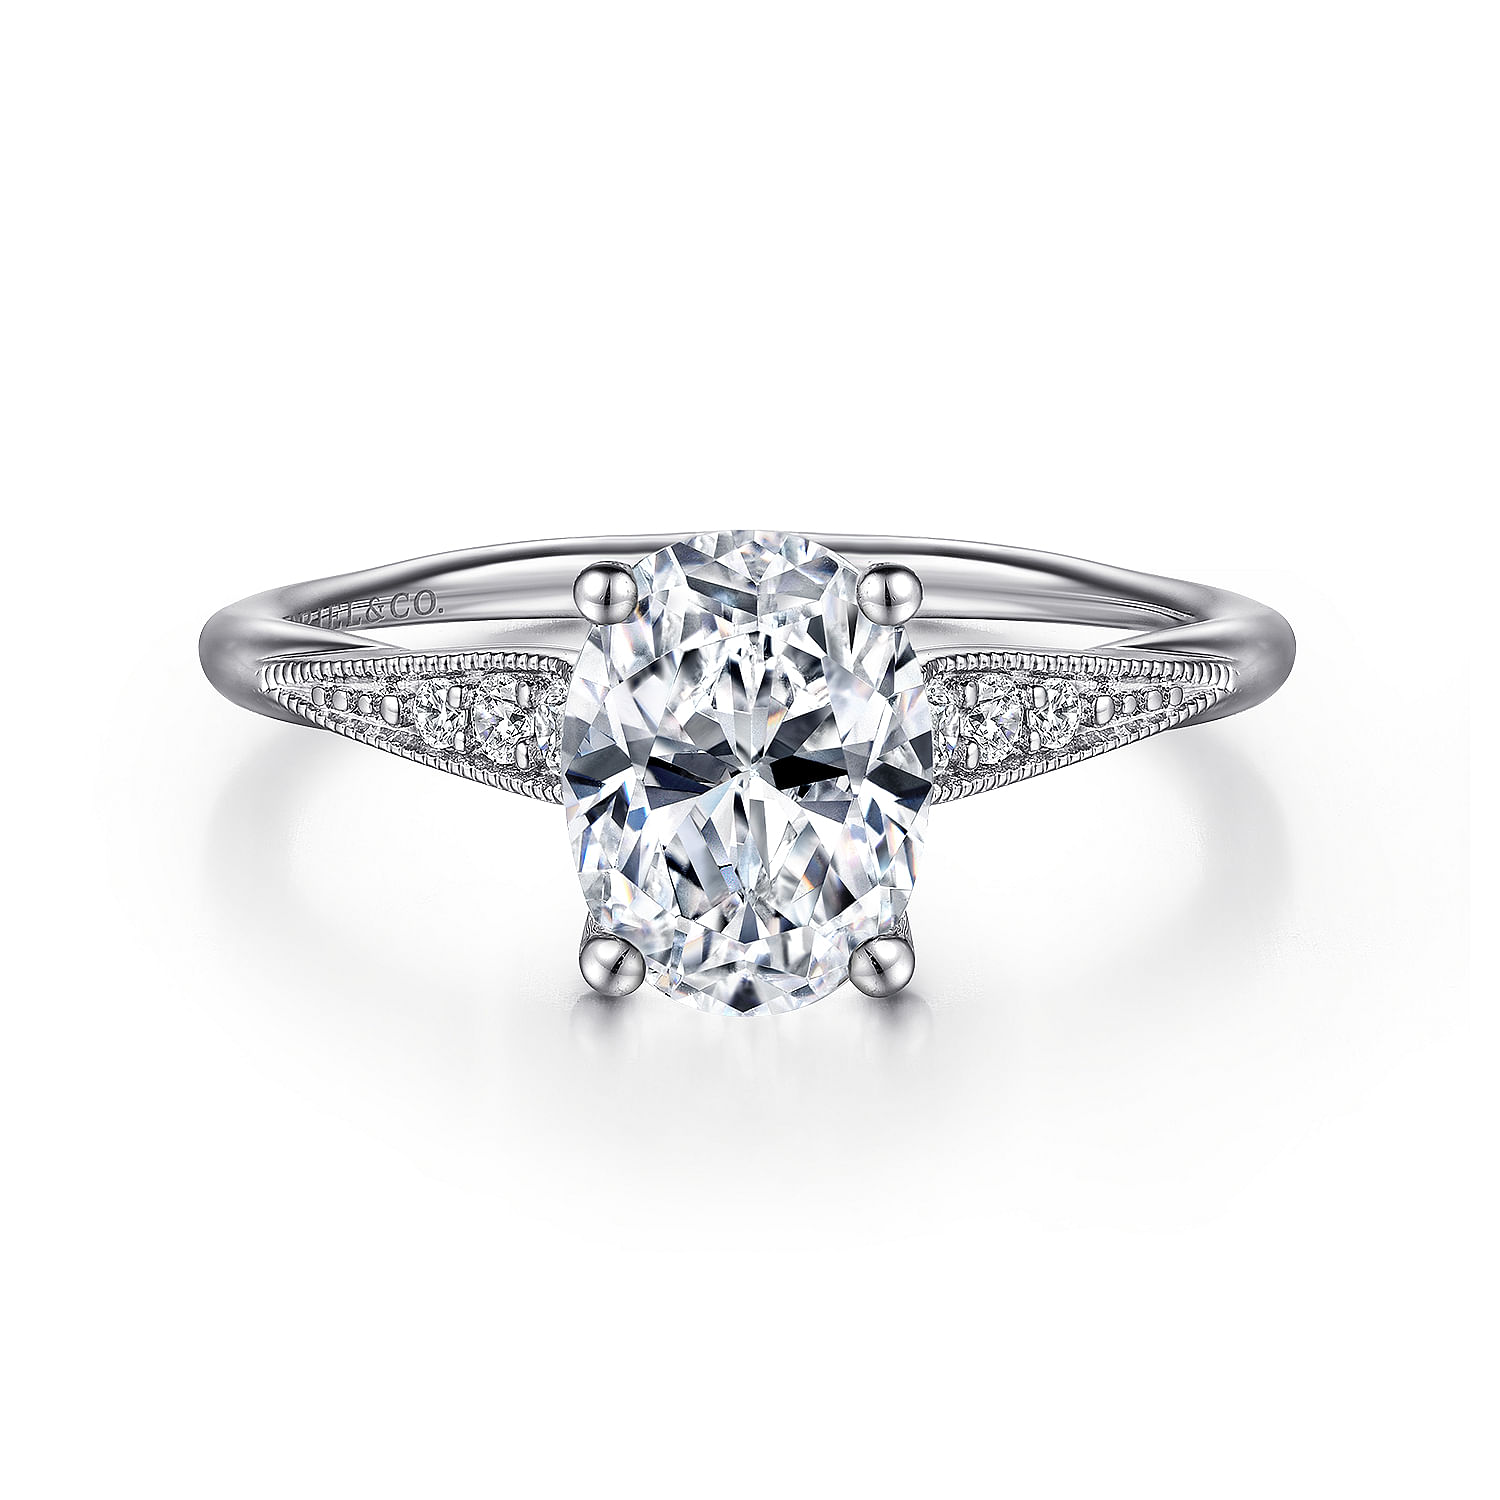 Riley - 14K White Gold Oval Diamond Engagement Ring